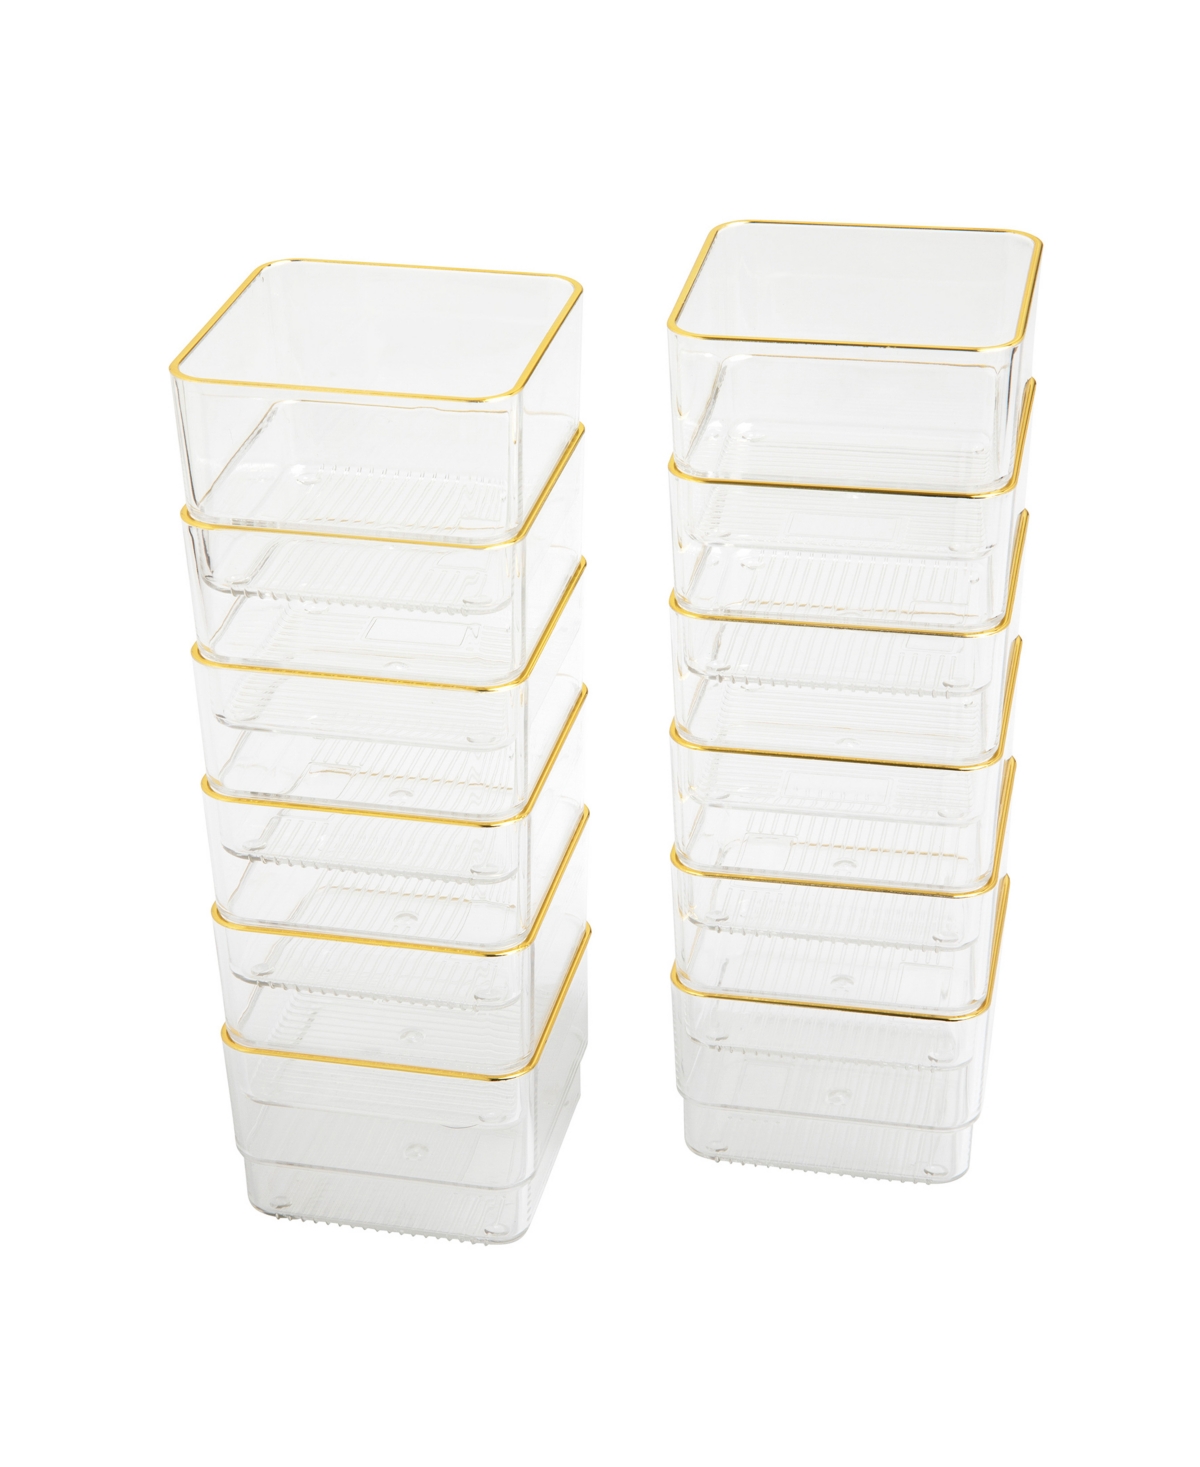 Martha Stewart Kerry 12 Piece Plastic Stackable Office Desk Drawer Organizers Set, 3" X 3" In Clear,gold Trim